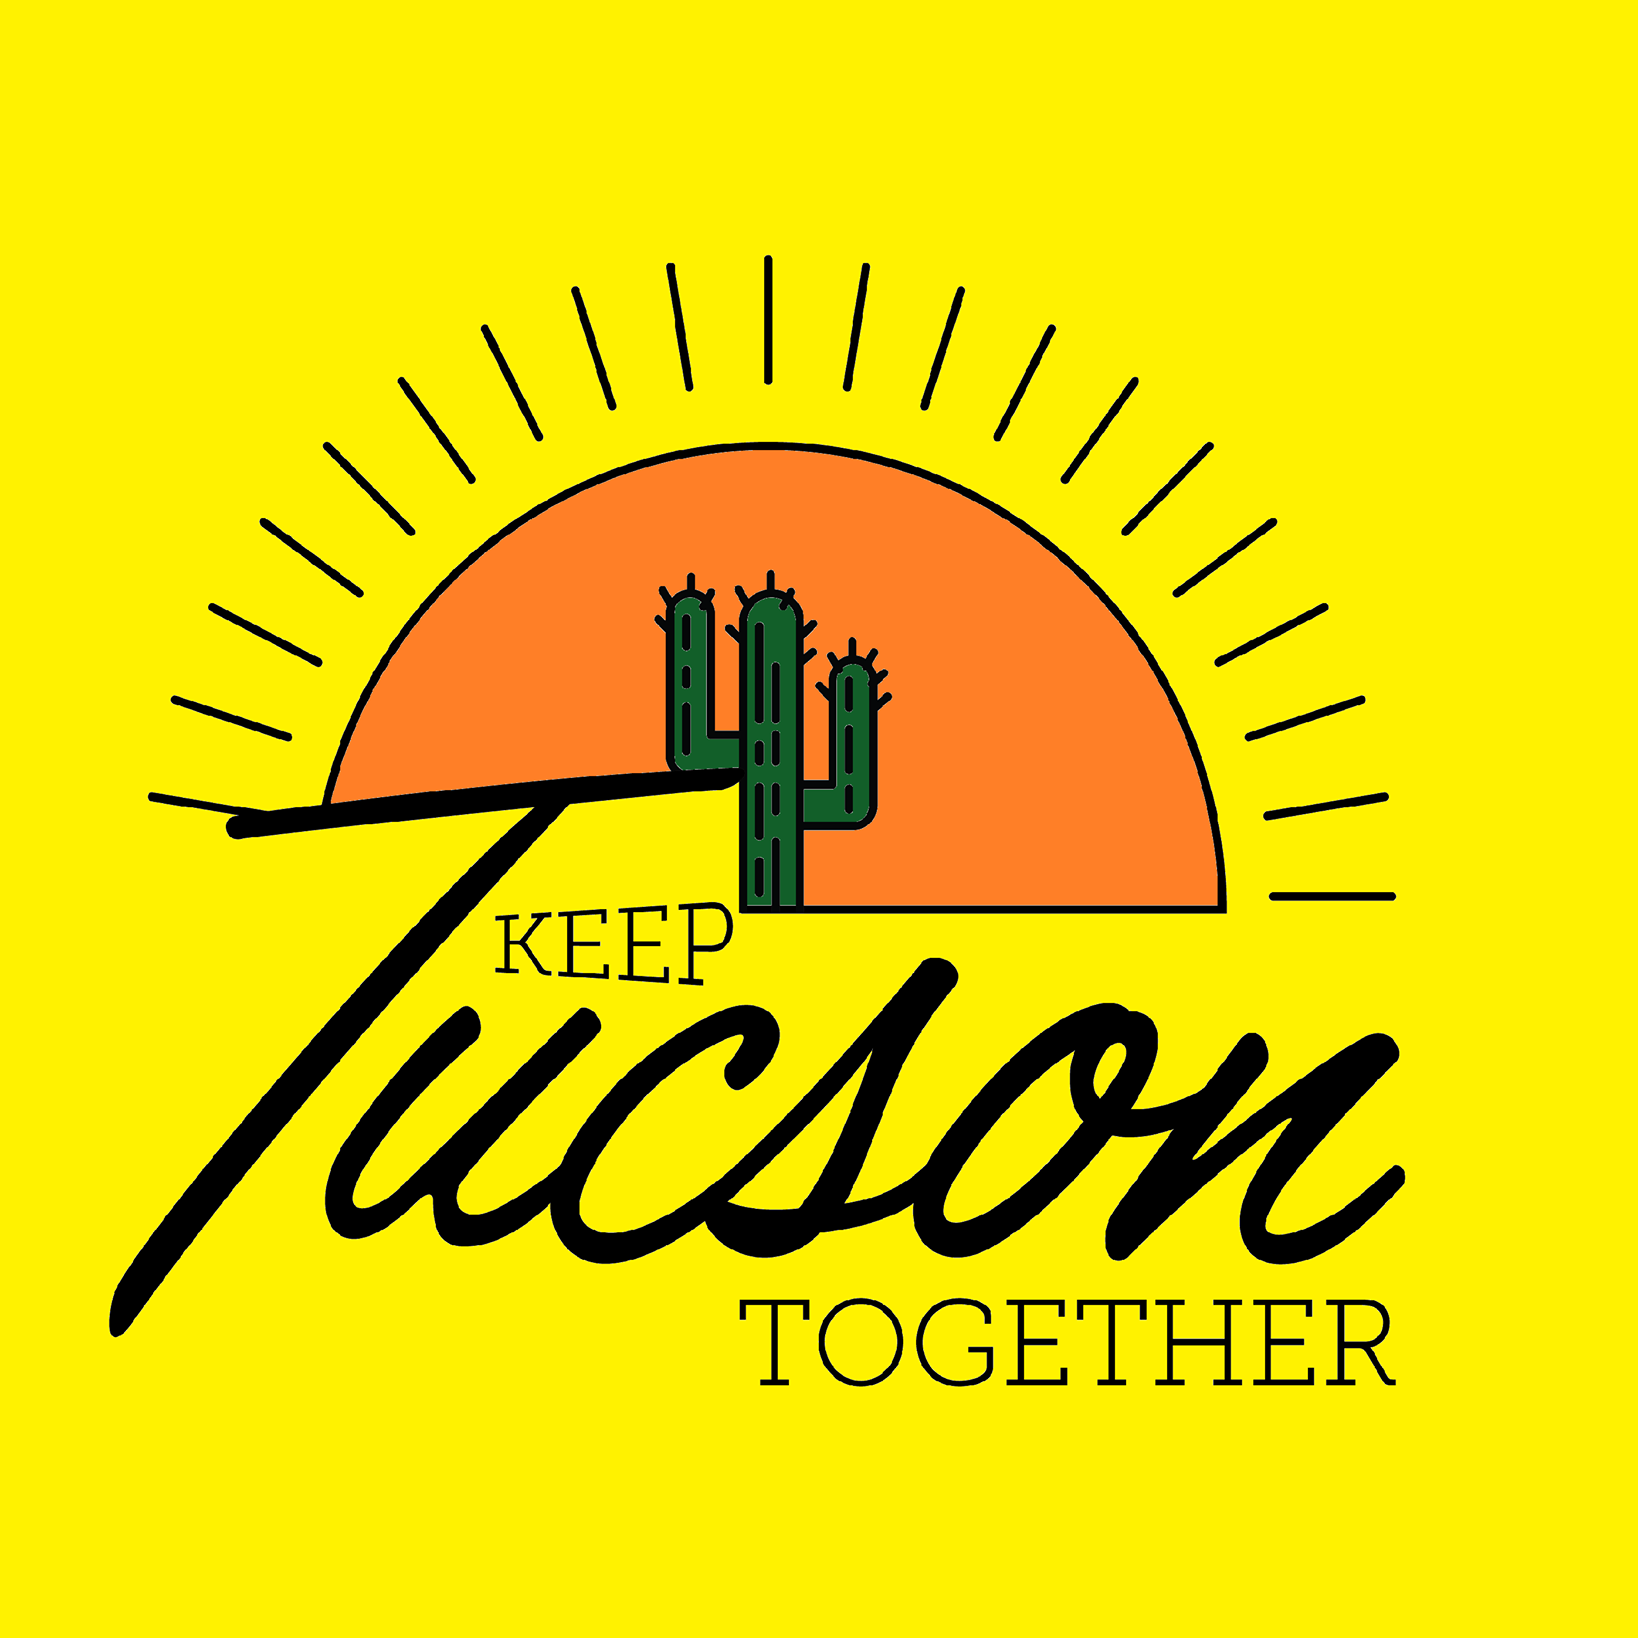 Margo Cowan on Keep Tucson Together